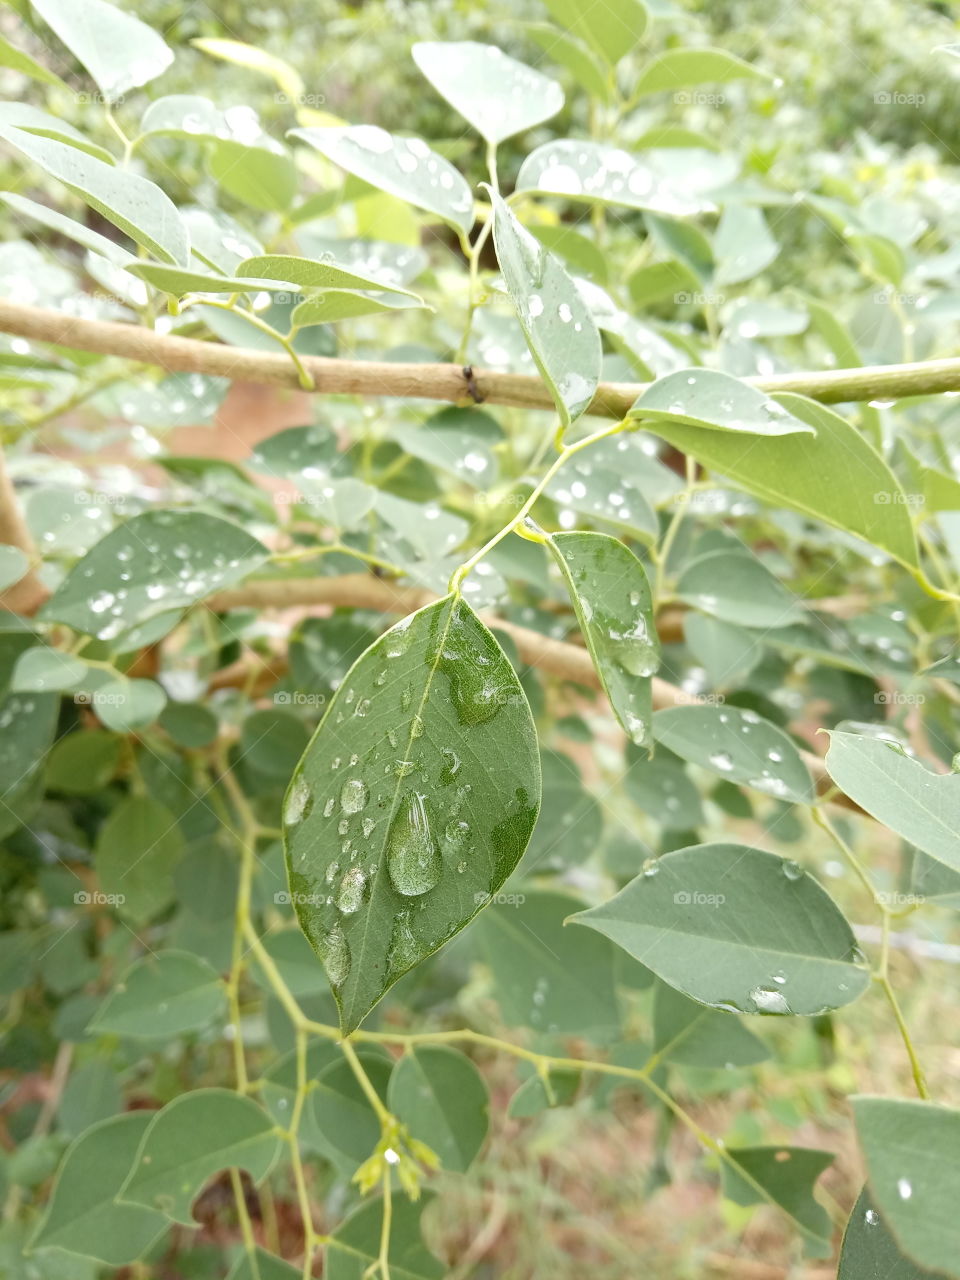 water's drop on leafs